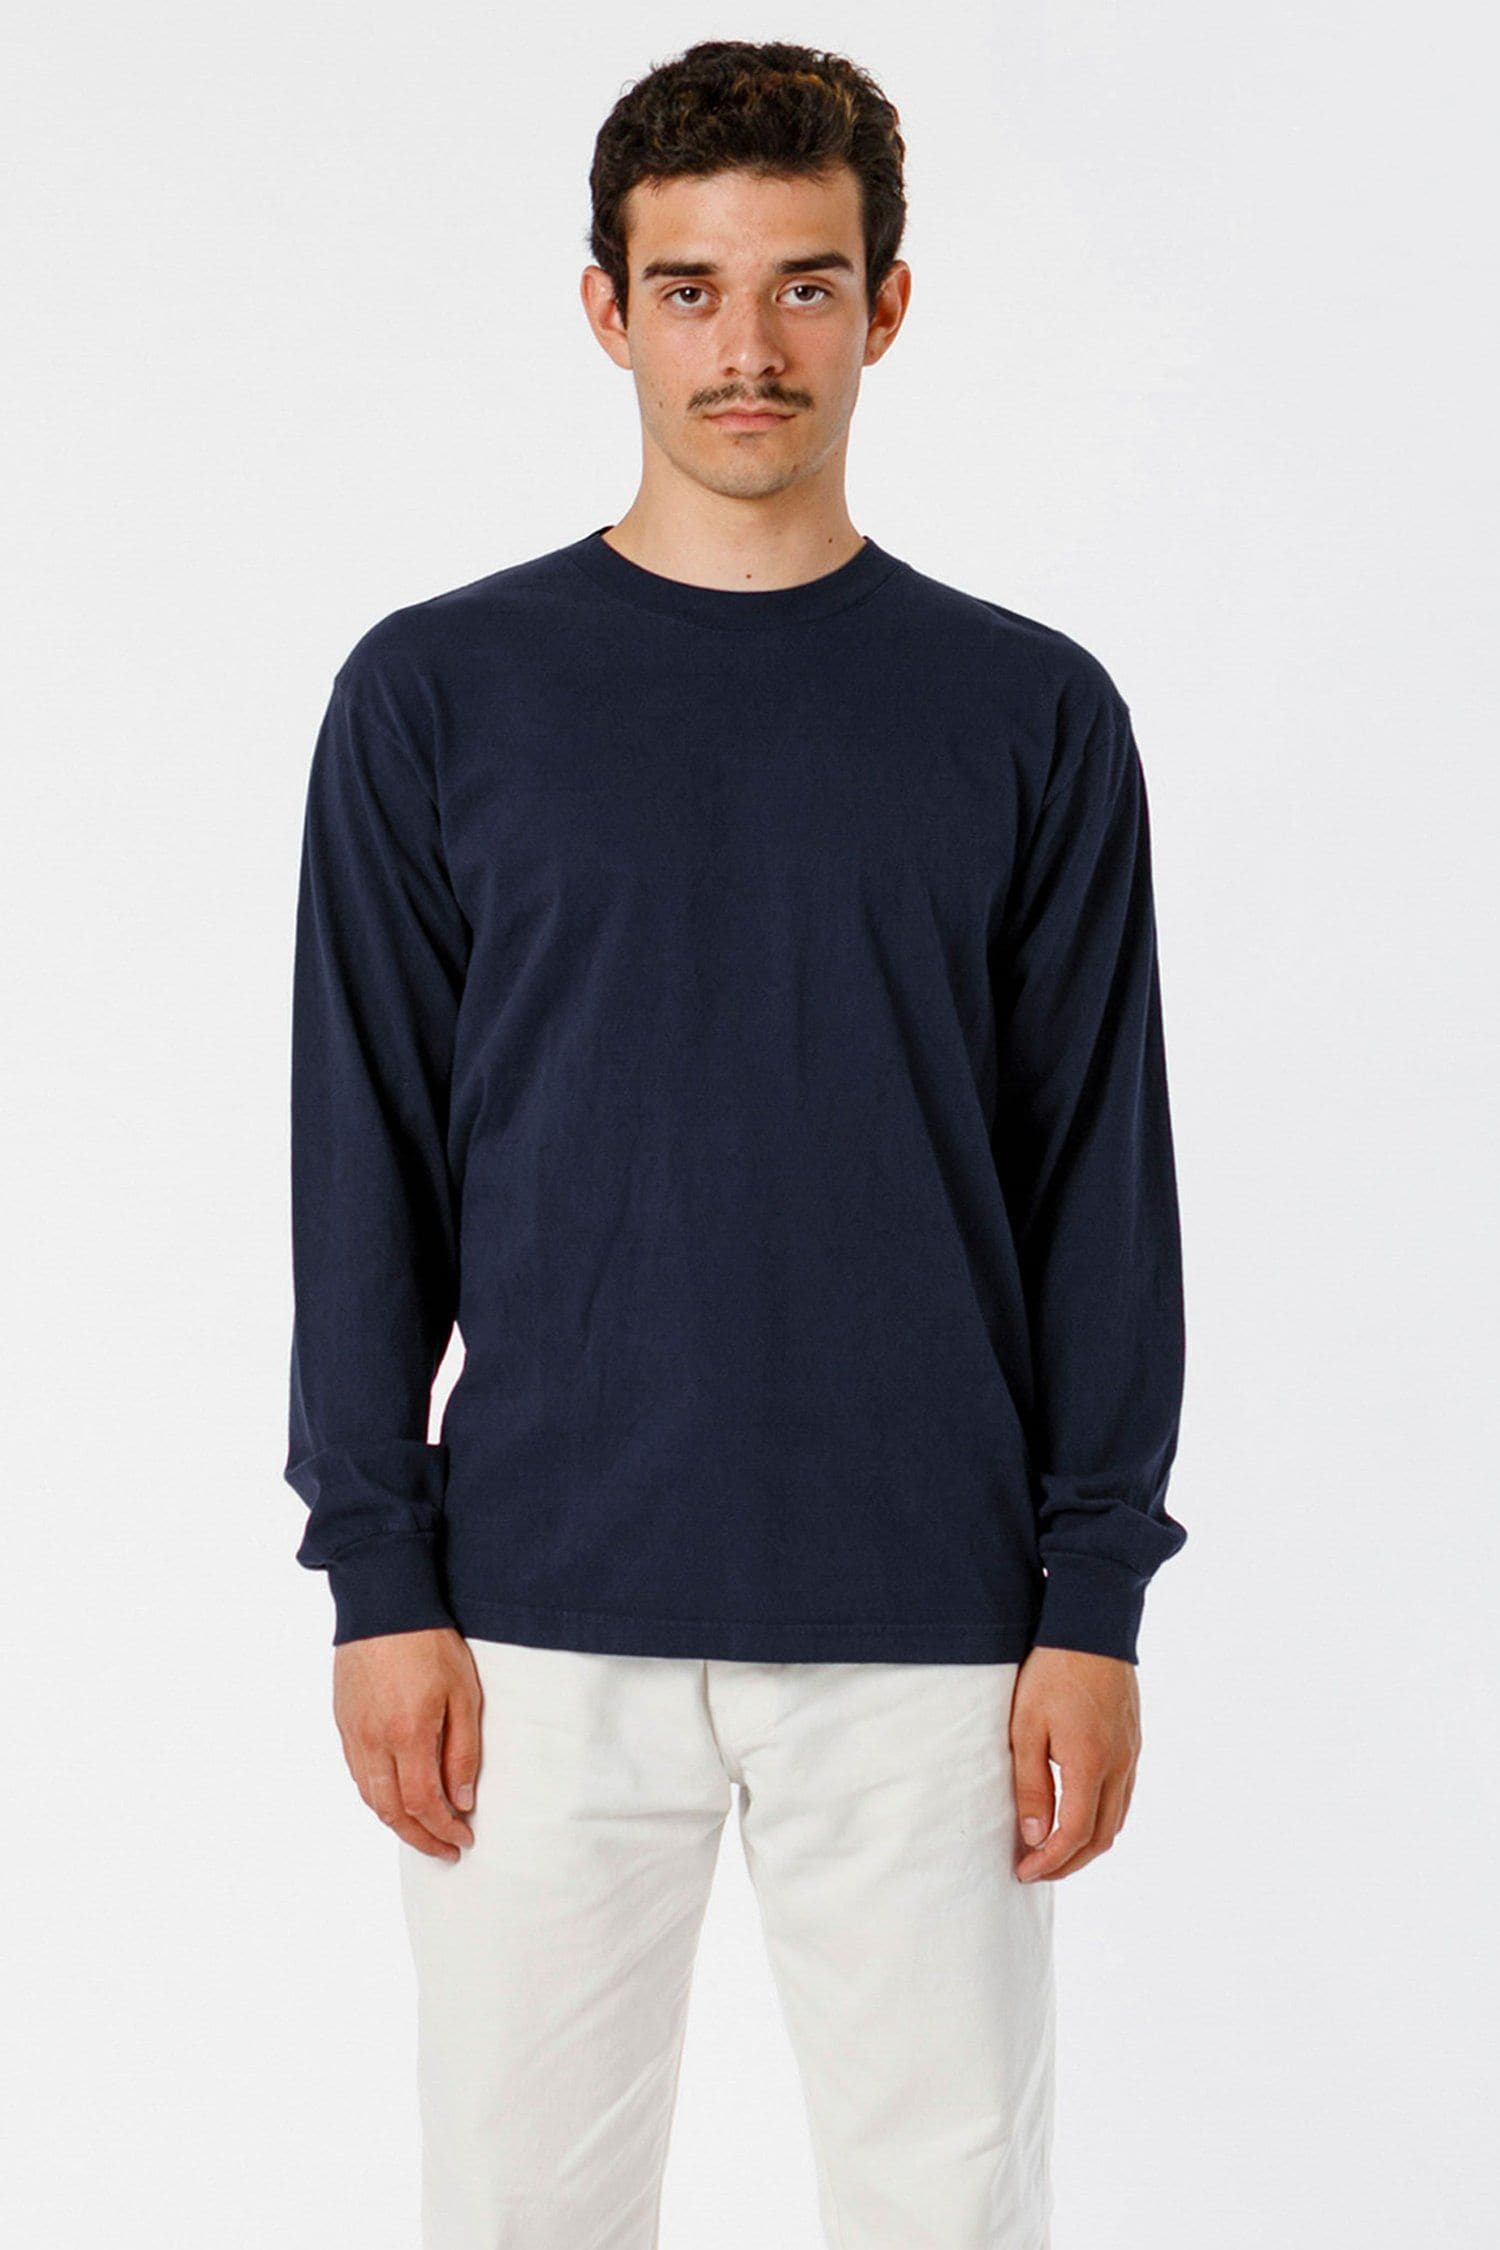 Navy Blue Long Sleeve T-Shirt